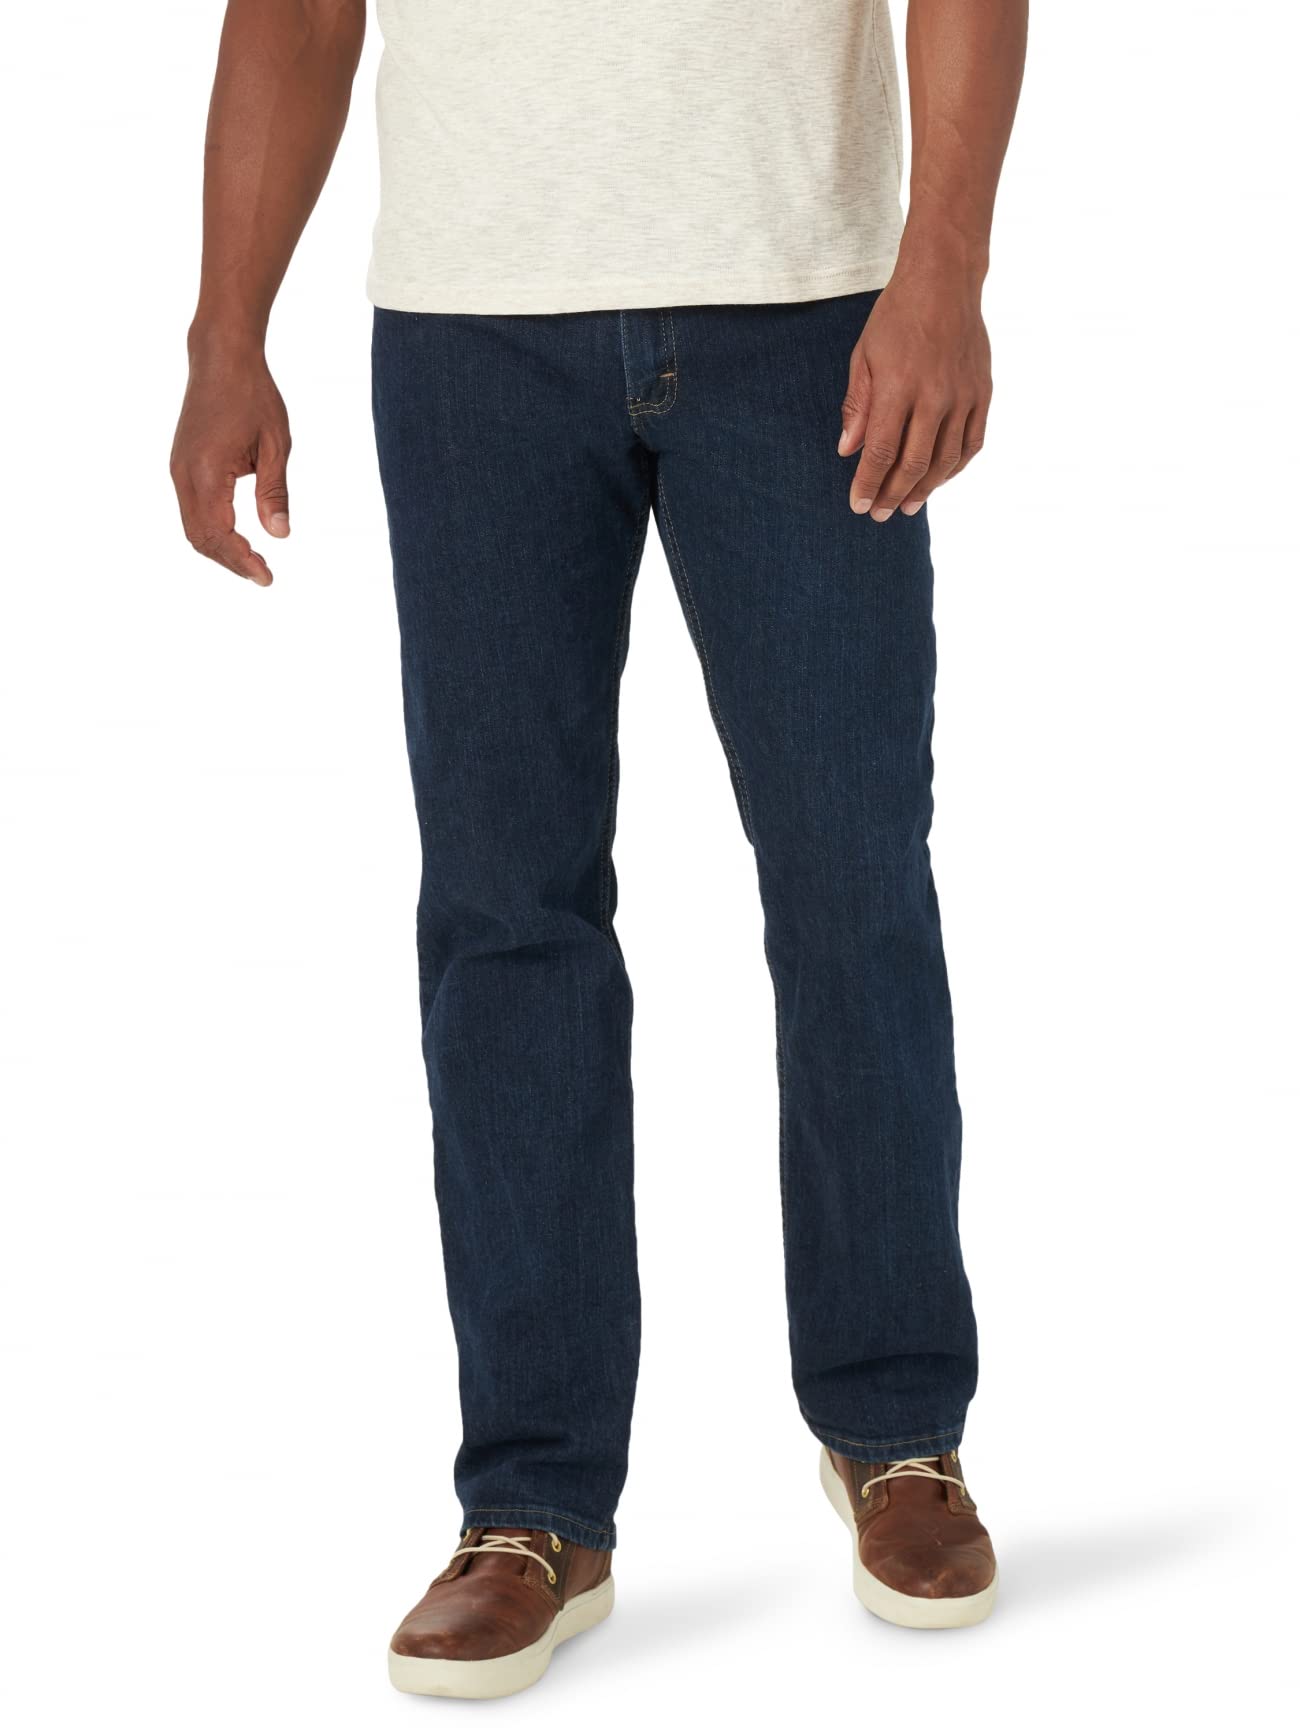 Mua Wrangler Authentics Men's Regular Fit Comfort Flex Waist Jean trên  Amazon Mỹ chính hãng 2023 | Giaonhan247